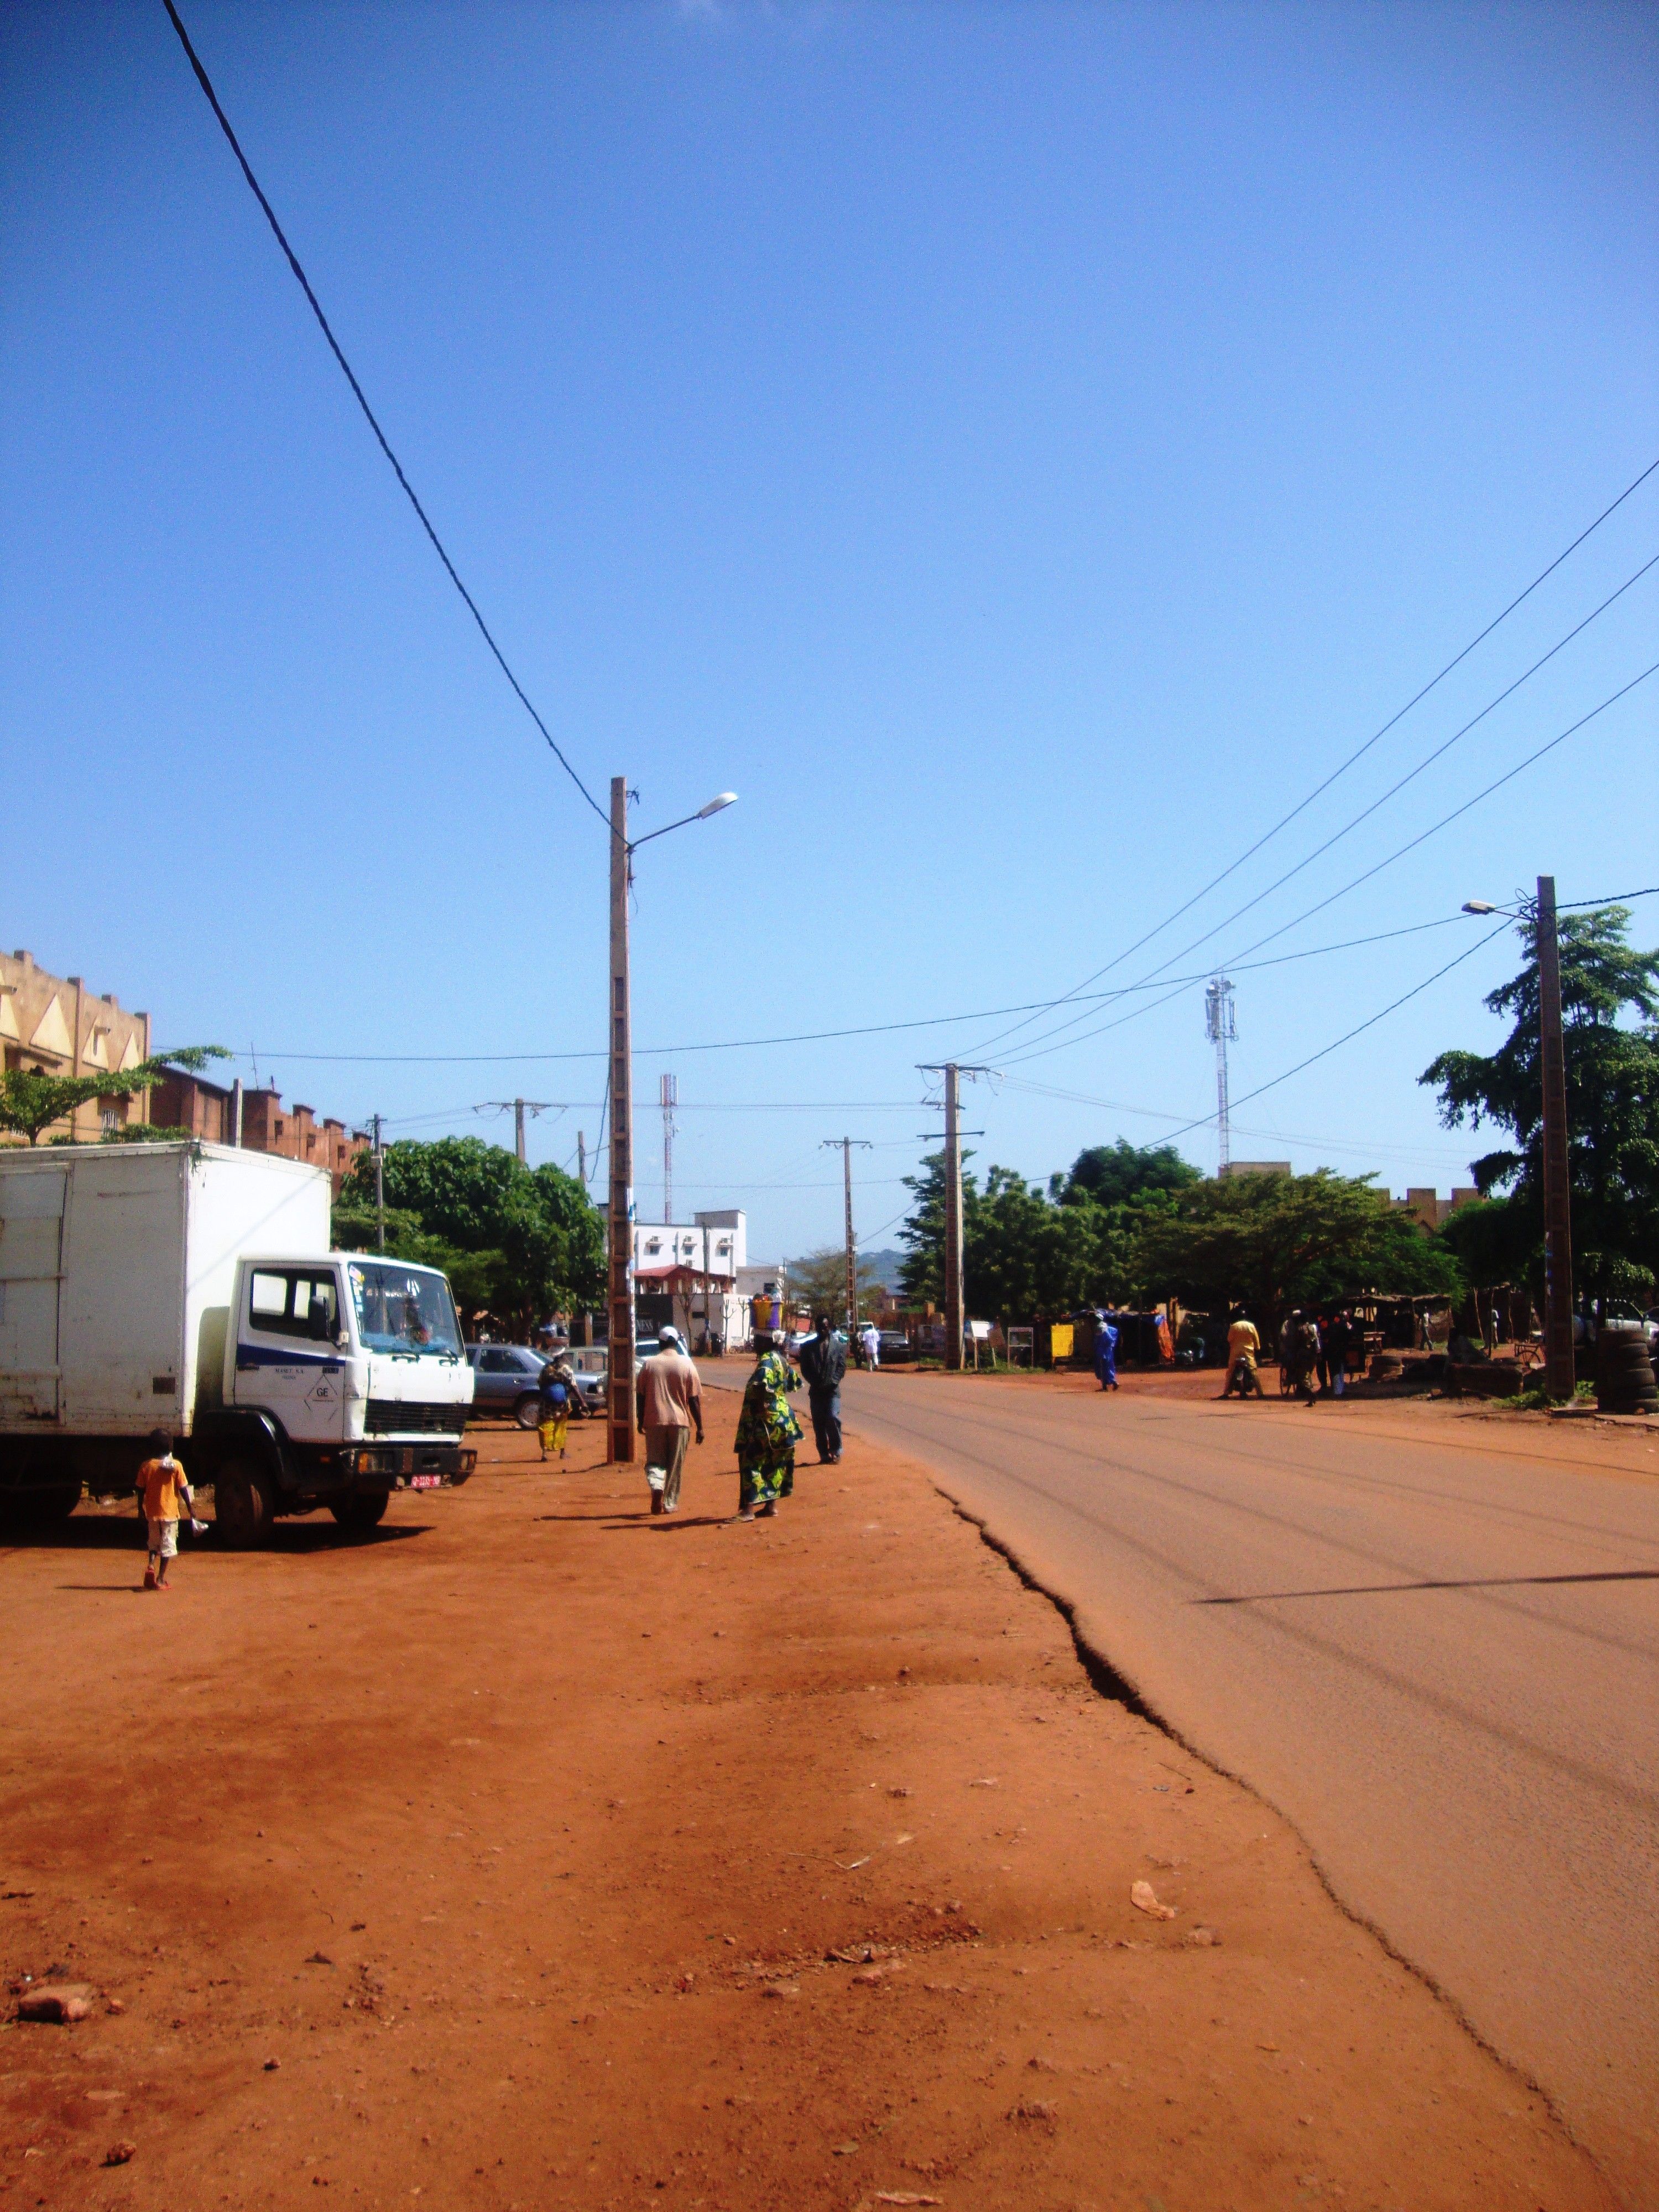 Roadside in Mali (photo: Karim Diarra)